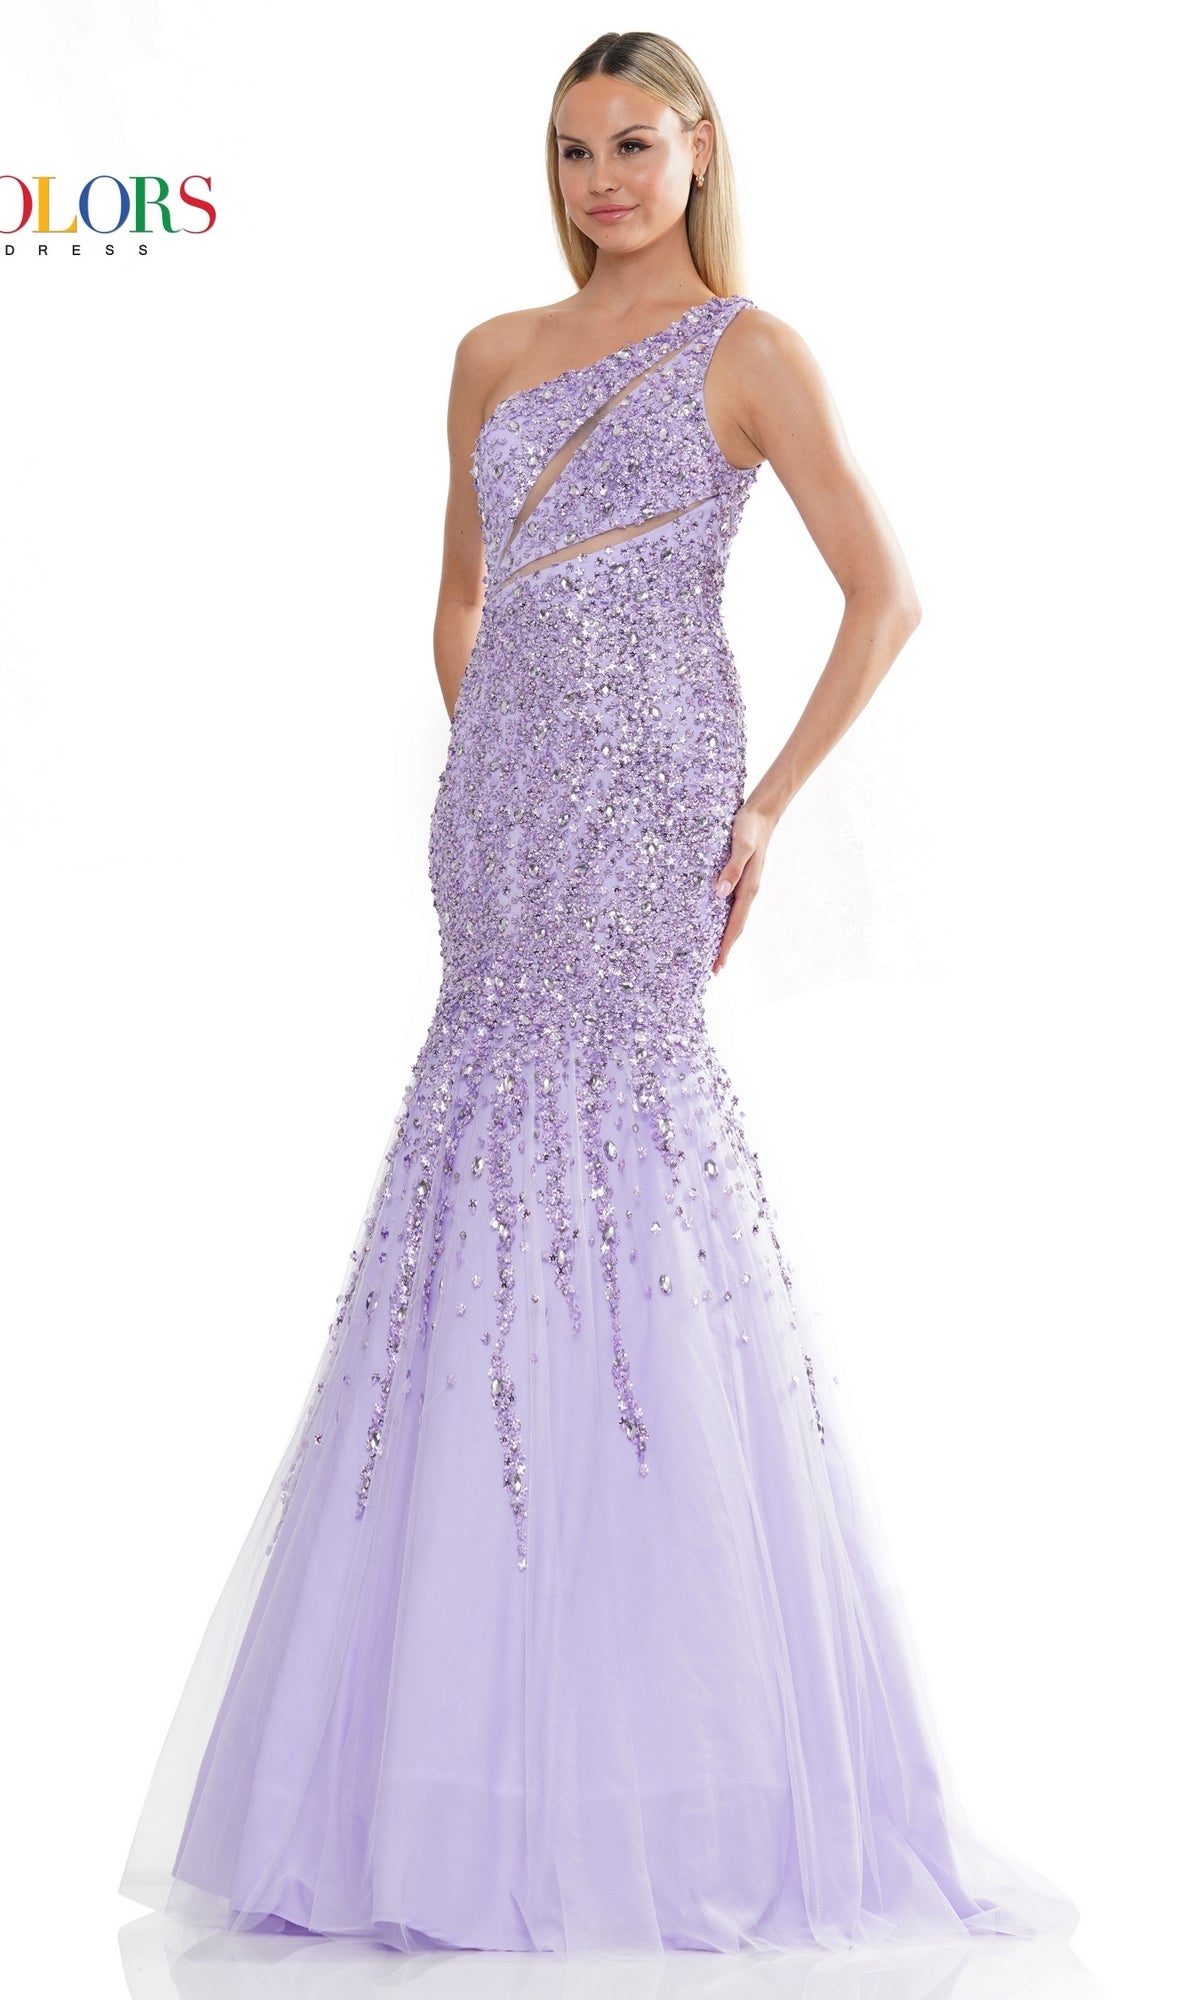 Colors Dress Mermaid Prom Dress 3193